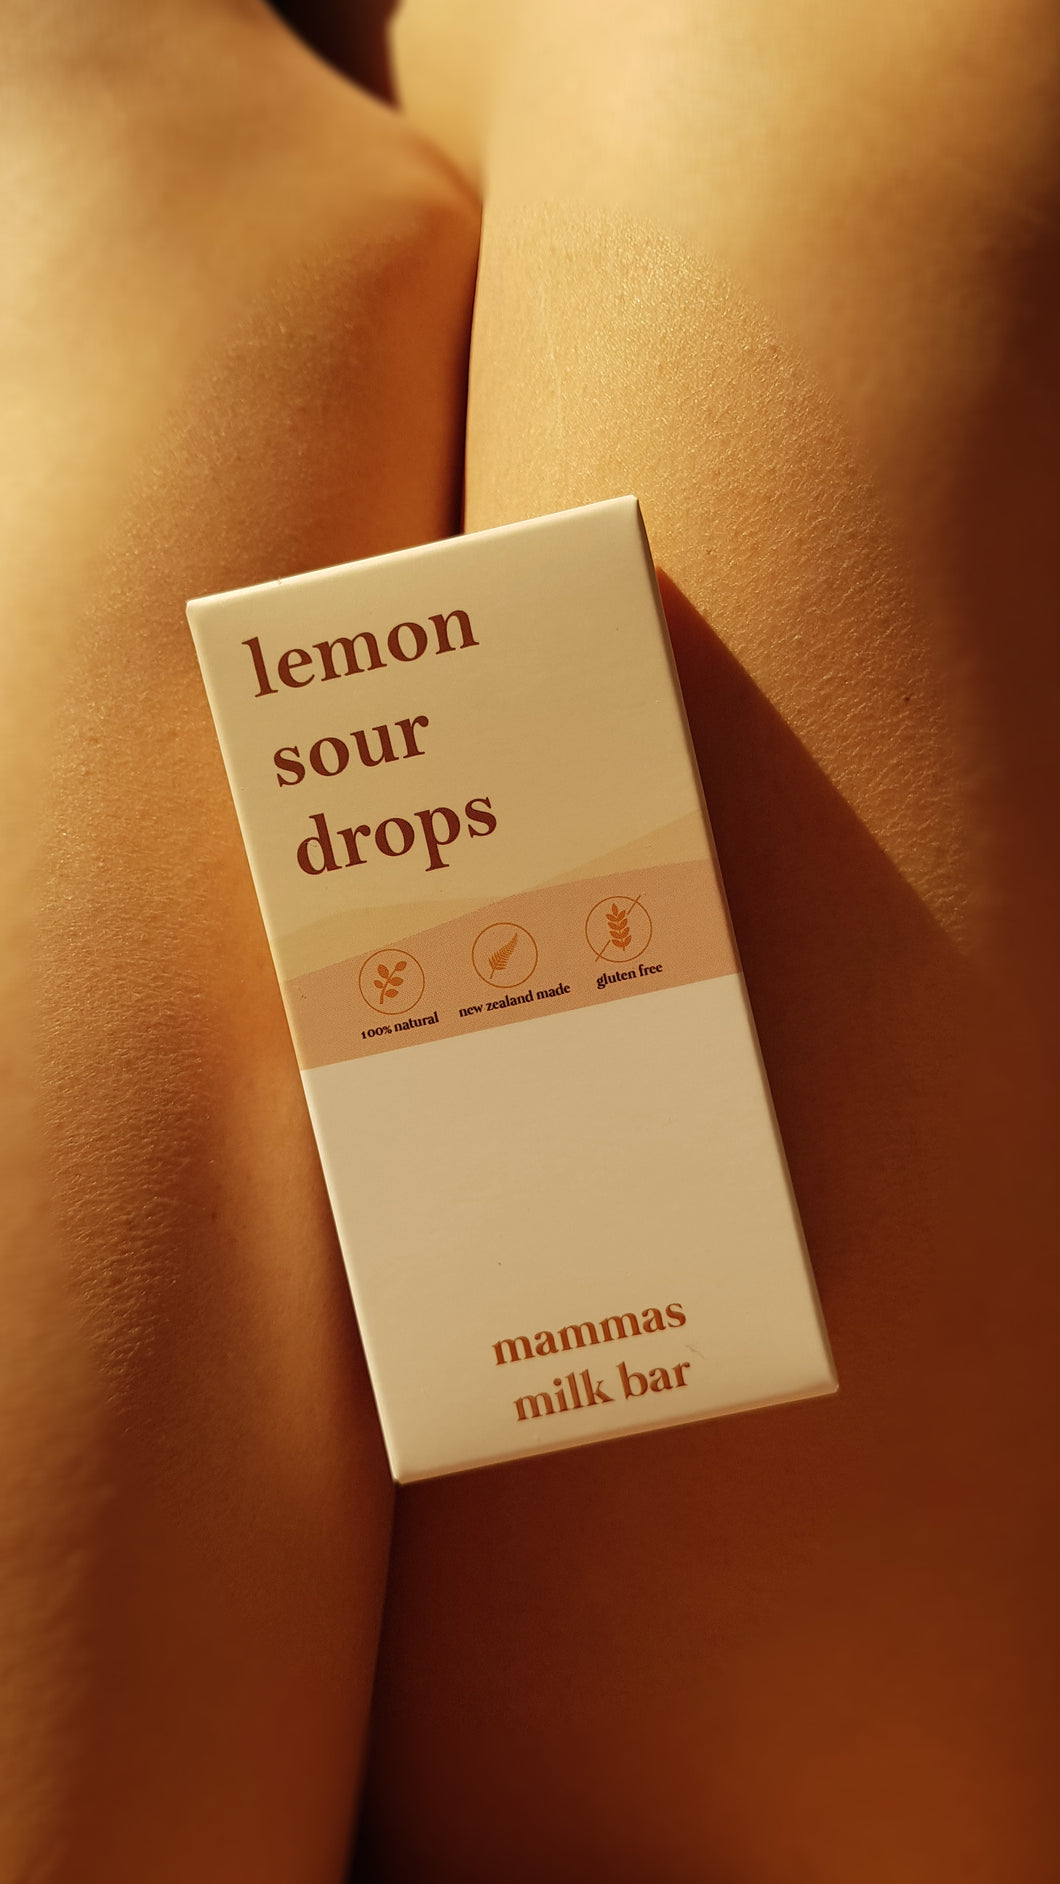 Lemon Sour Drops for Morning Sickness